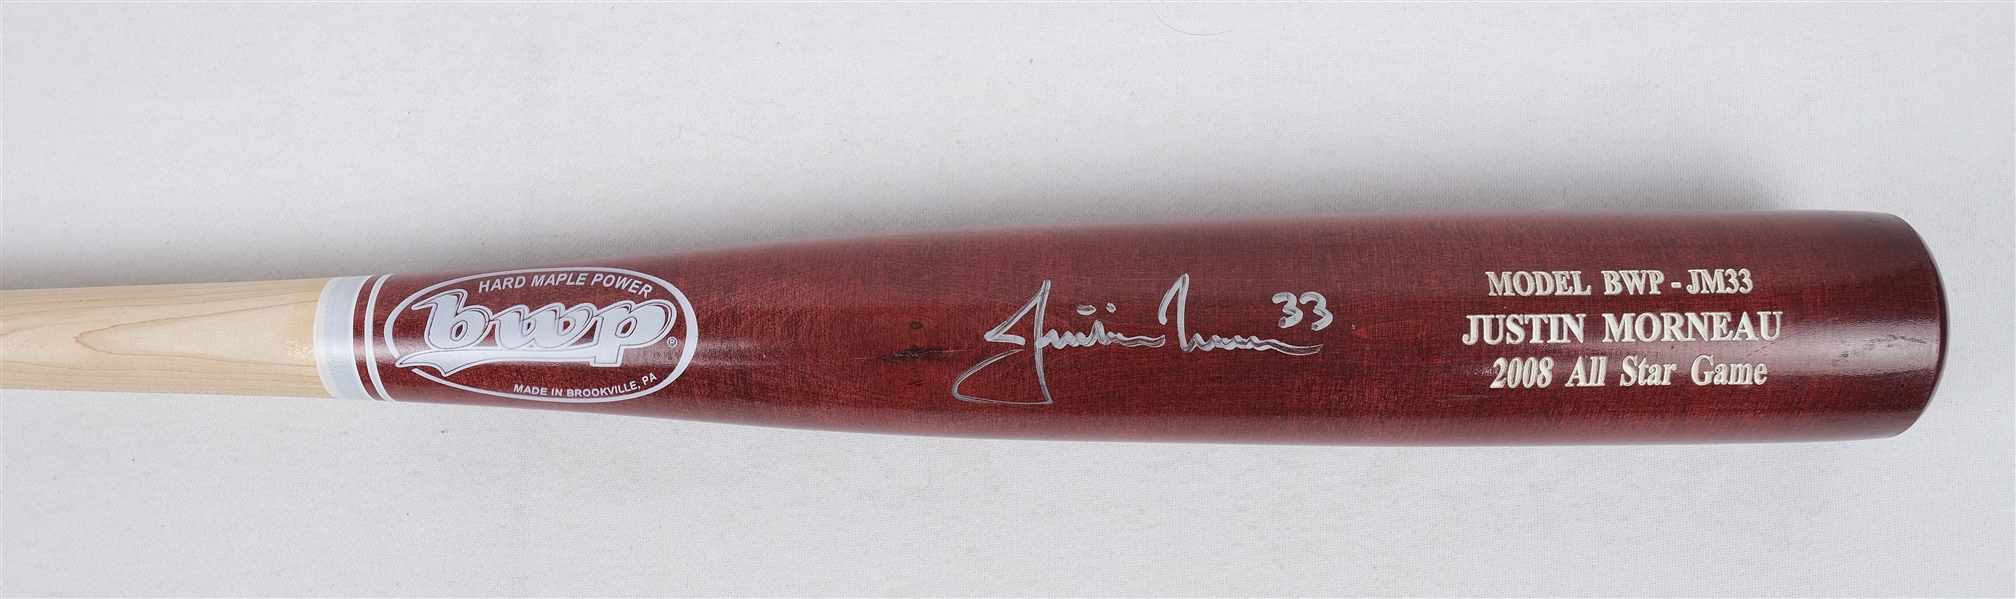 Justin Morneau Autographed 2008 All-Star Game Bat